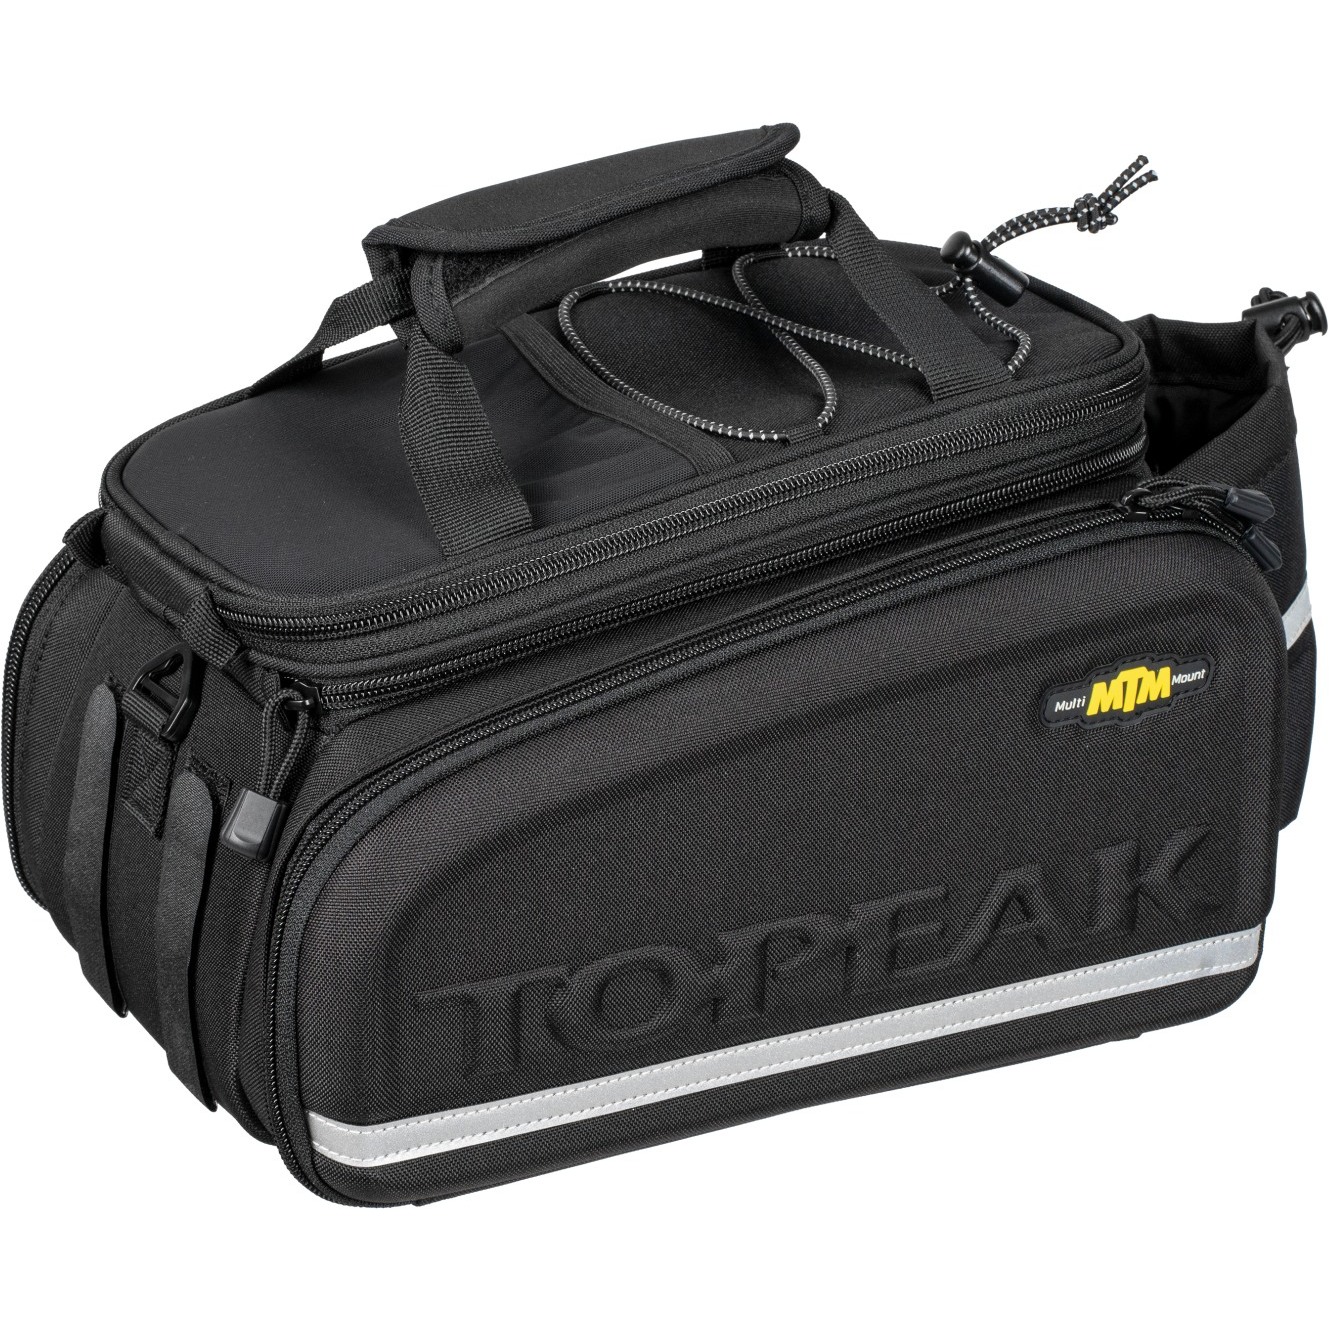 Produktbild von Topeak MTM TrunkBag DXP Gepäckträgertasche - on Top